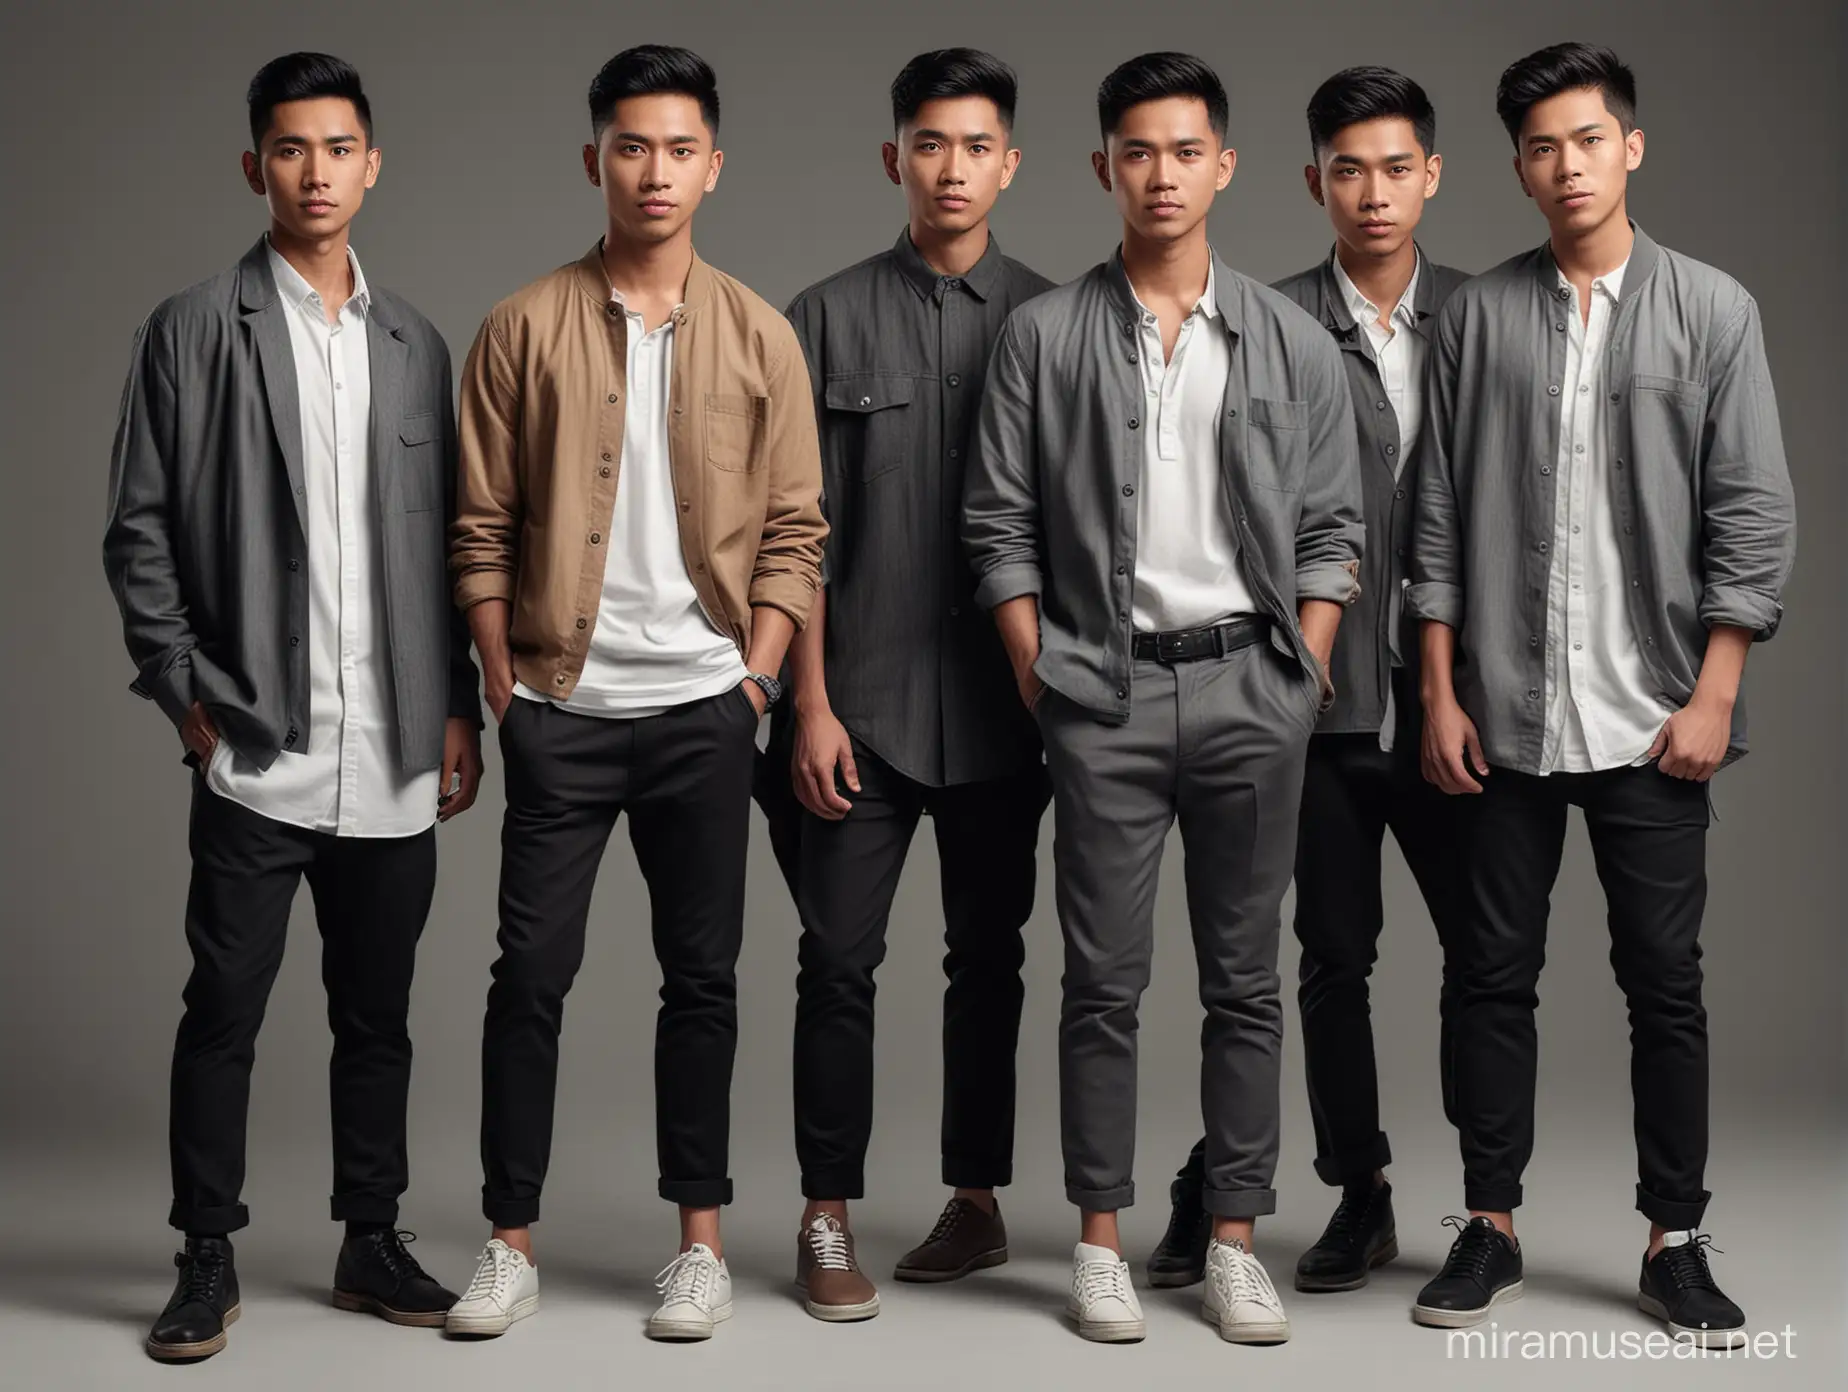 Fashion Group Photo Six Indonesian Men in Studio Setting